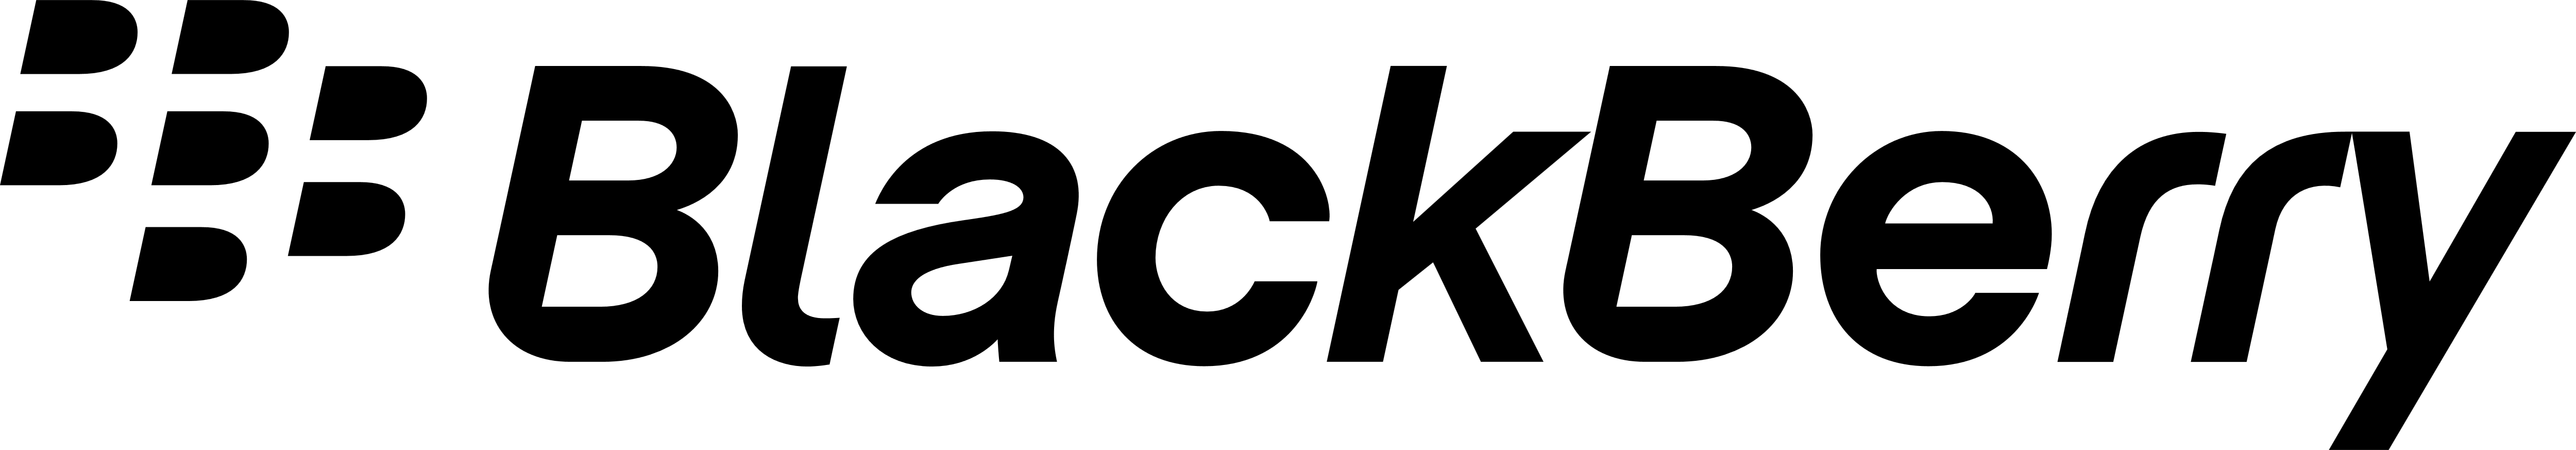 Blackberry-logo-png-transpare